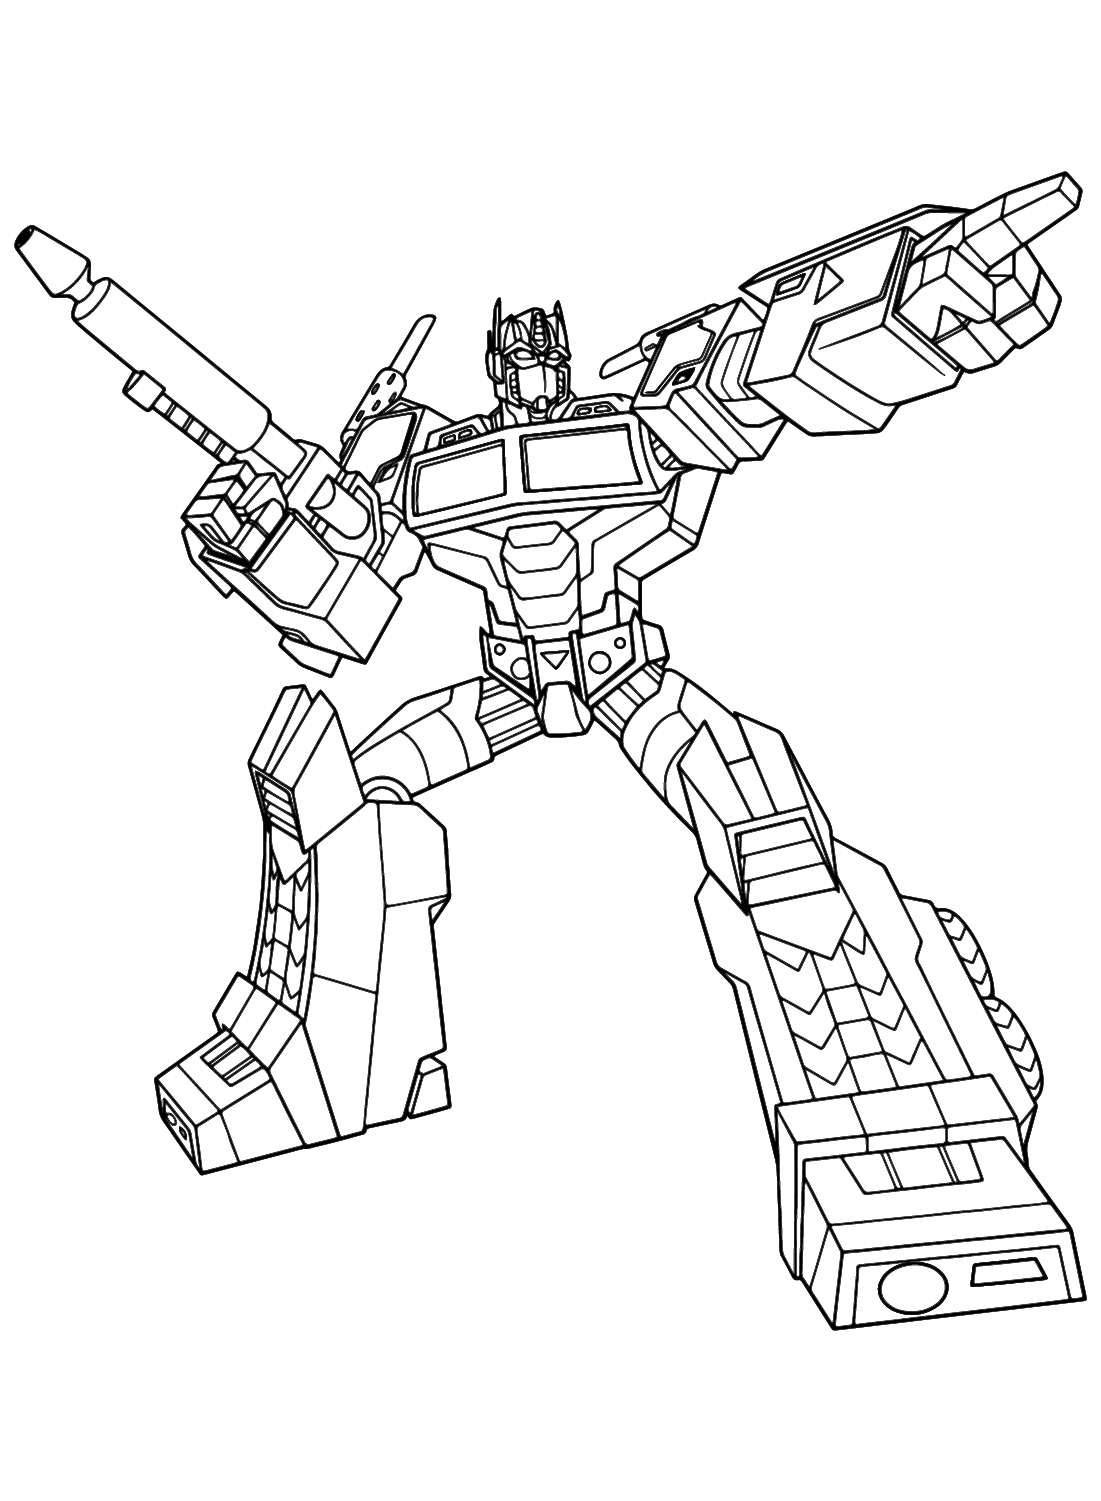 Pagine da colorare ufficiali Takara Tomy Transformers Cyberverse di Transformers